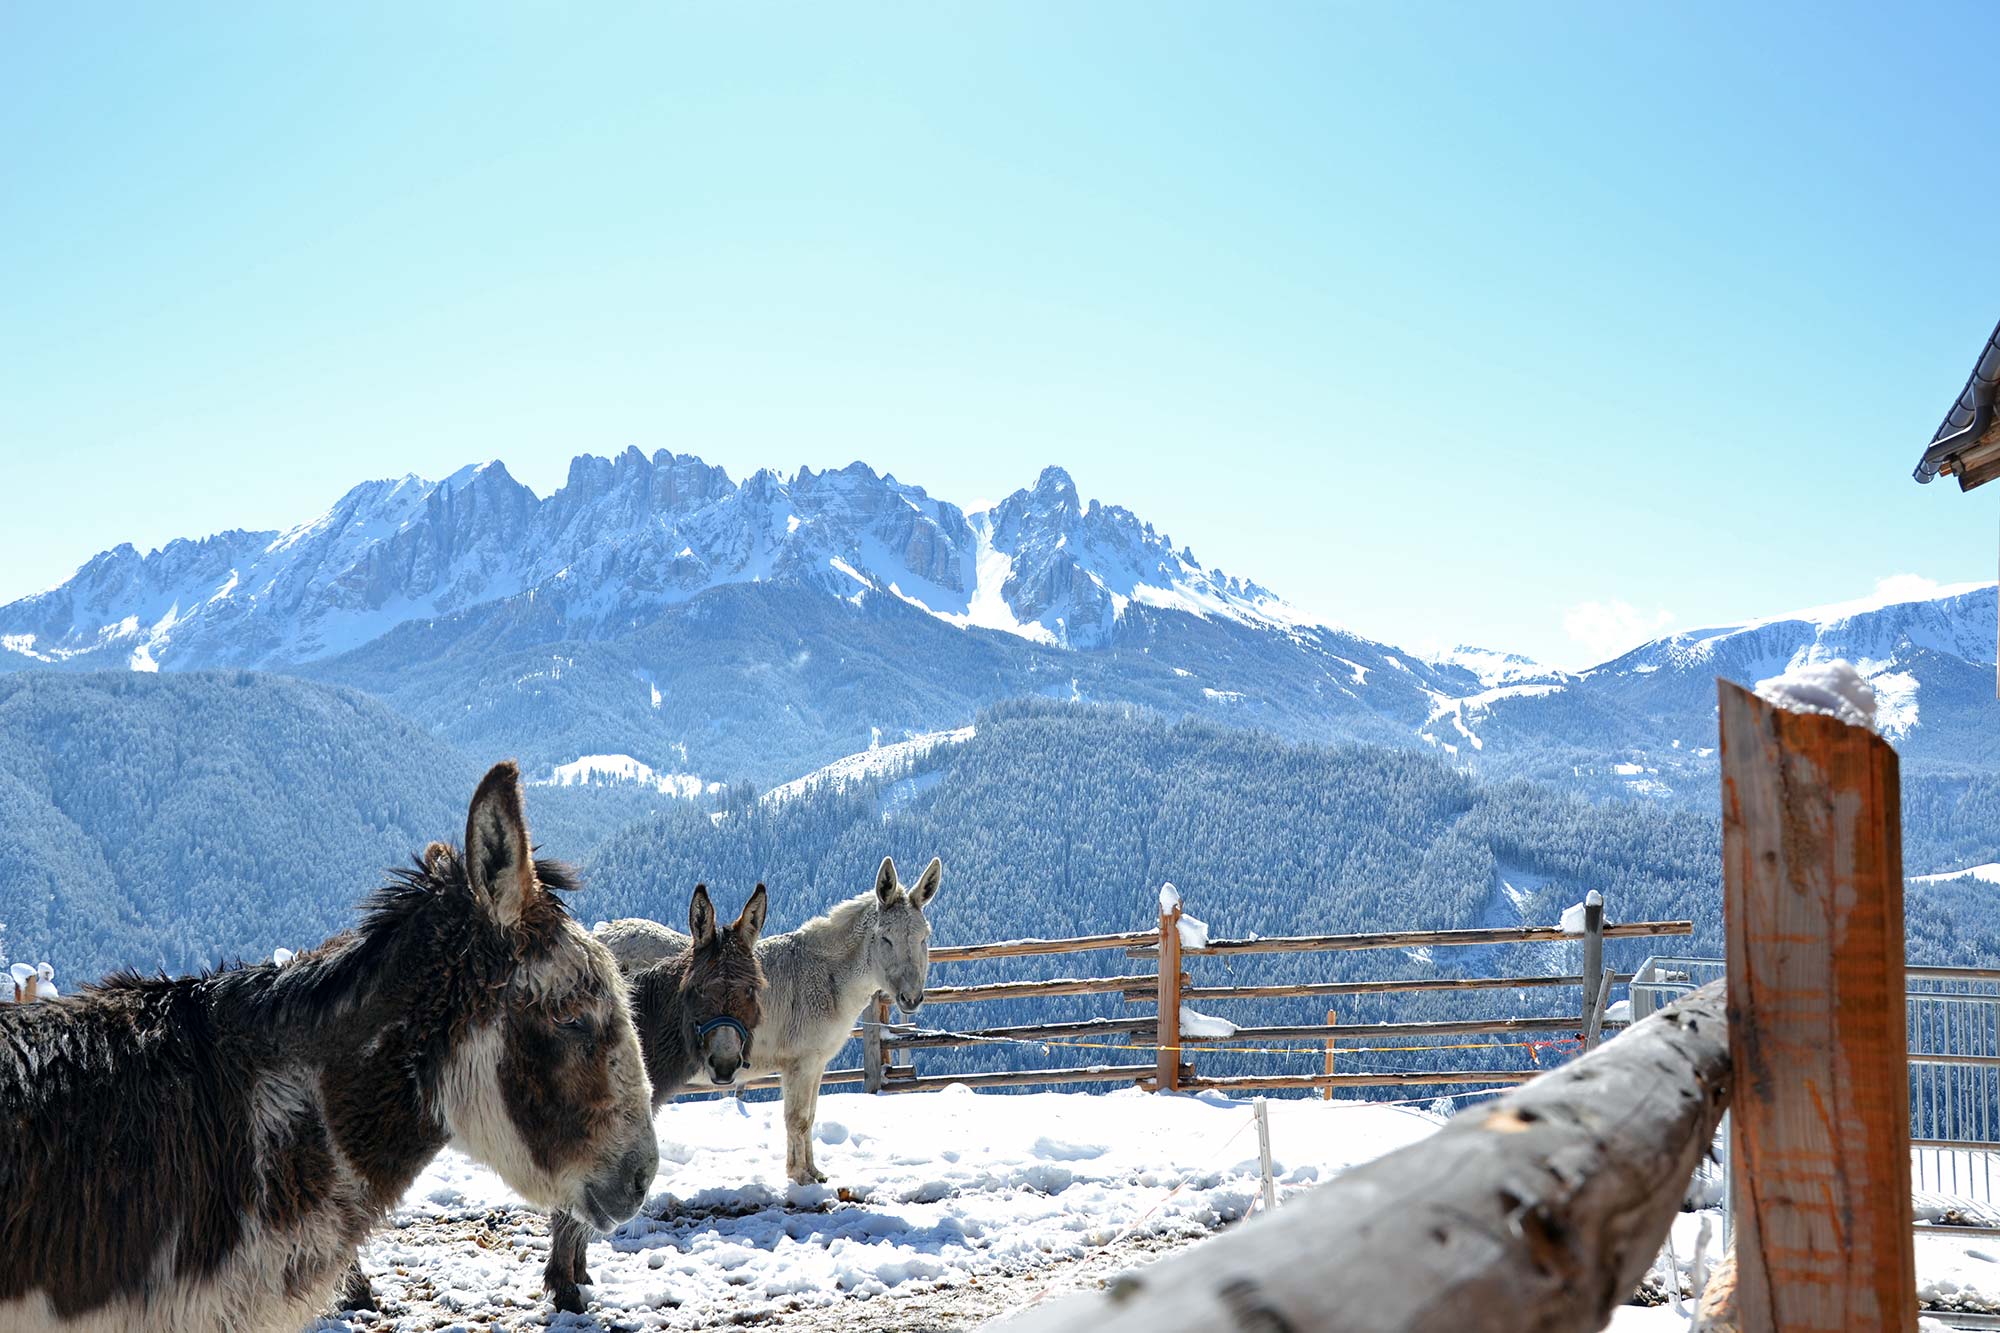 The donkeys enjoying the winter sun